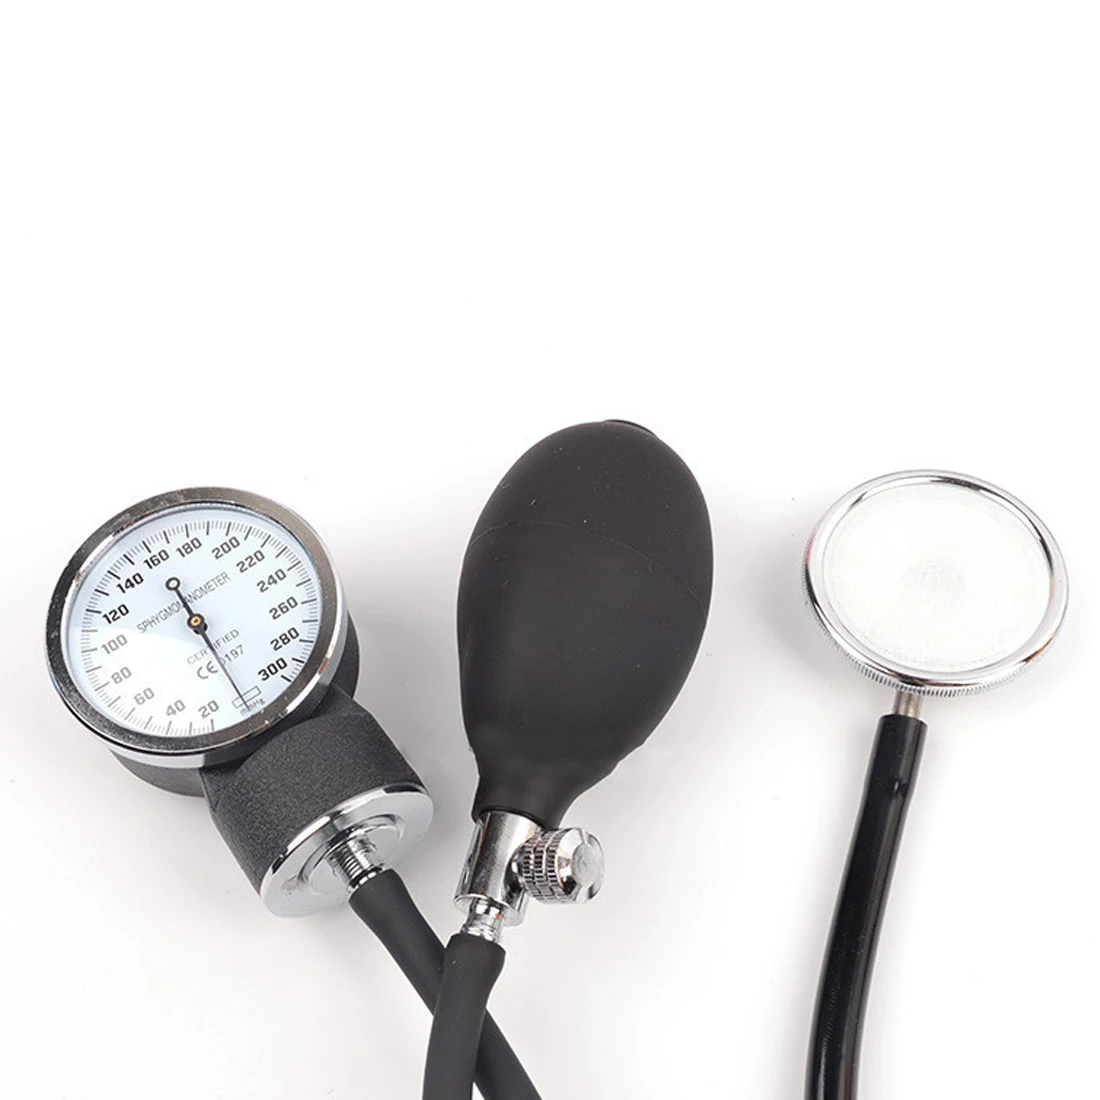 Preise Neue Blutdruck Monitor Meter Tonometer Manschette Stethoskop Kit Reise blutdruckmessgerät